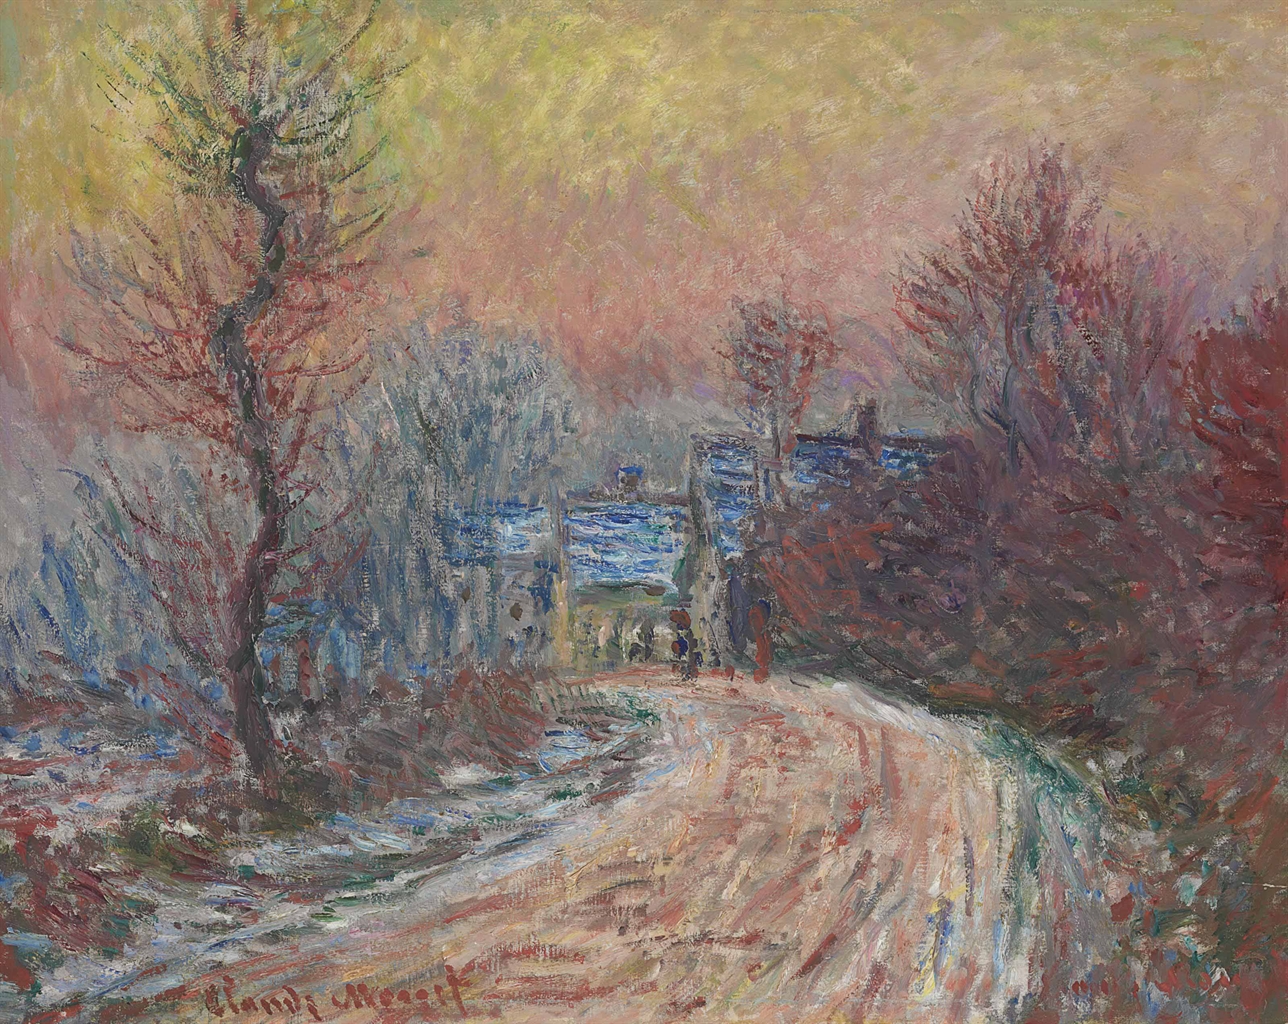 Claude+Monet-1840-1926 (886).jpg